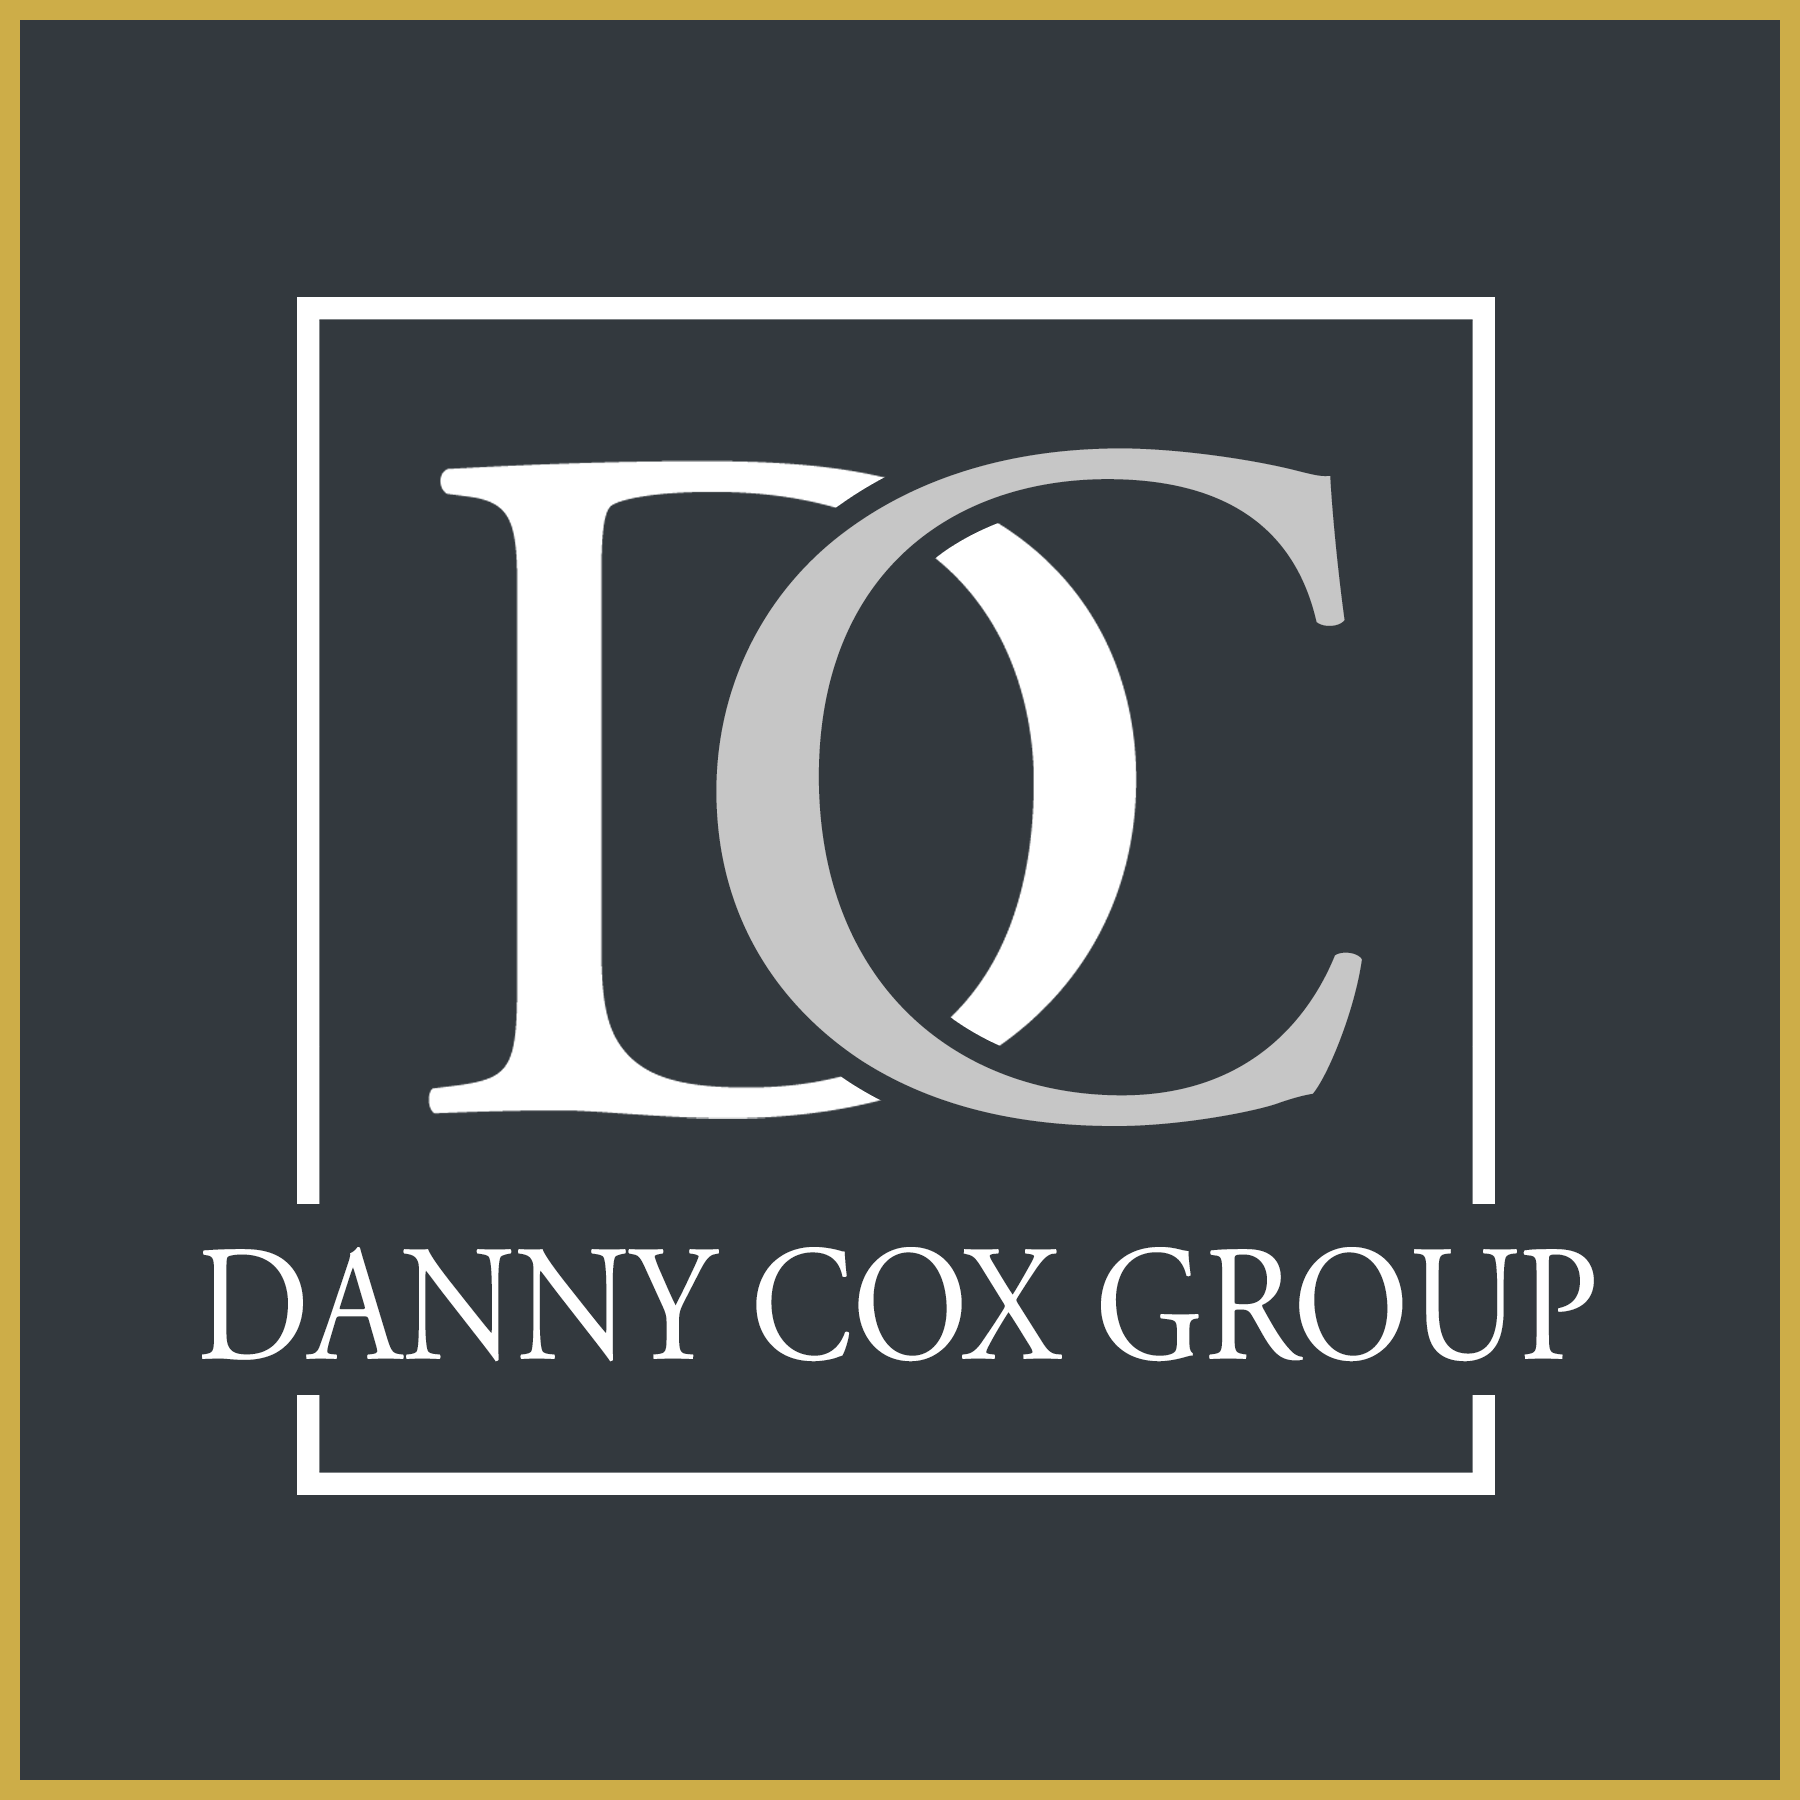 Danny Cox Group